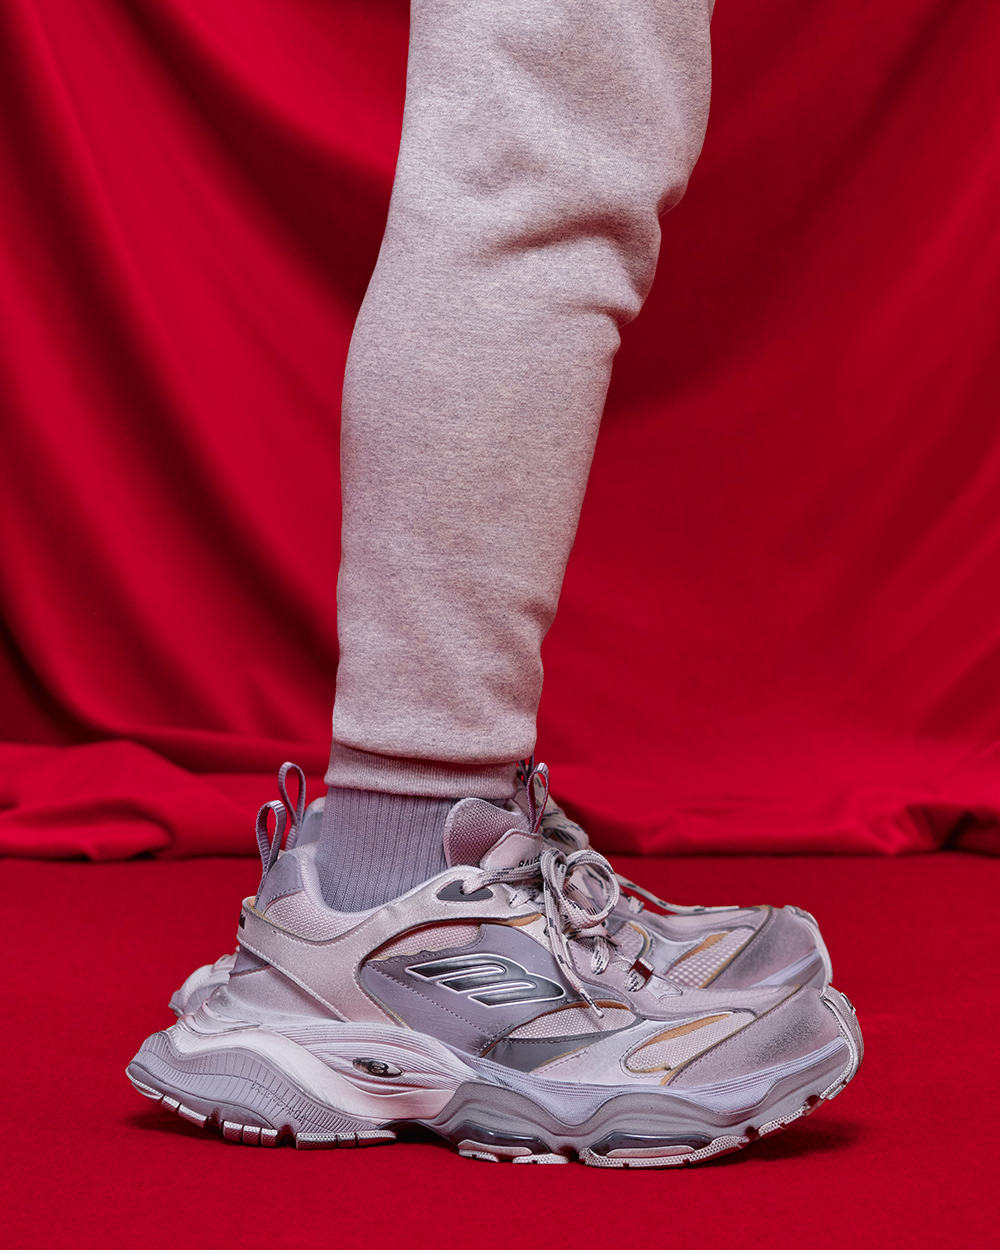 Chunky Balenciaga grey sneakers worn on feet with grey sweatpants and socks